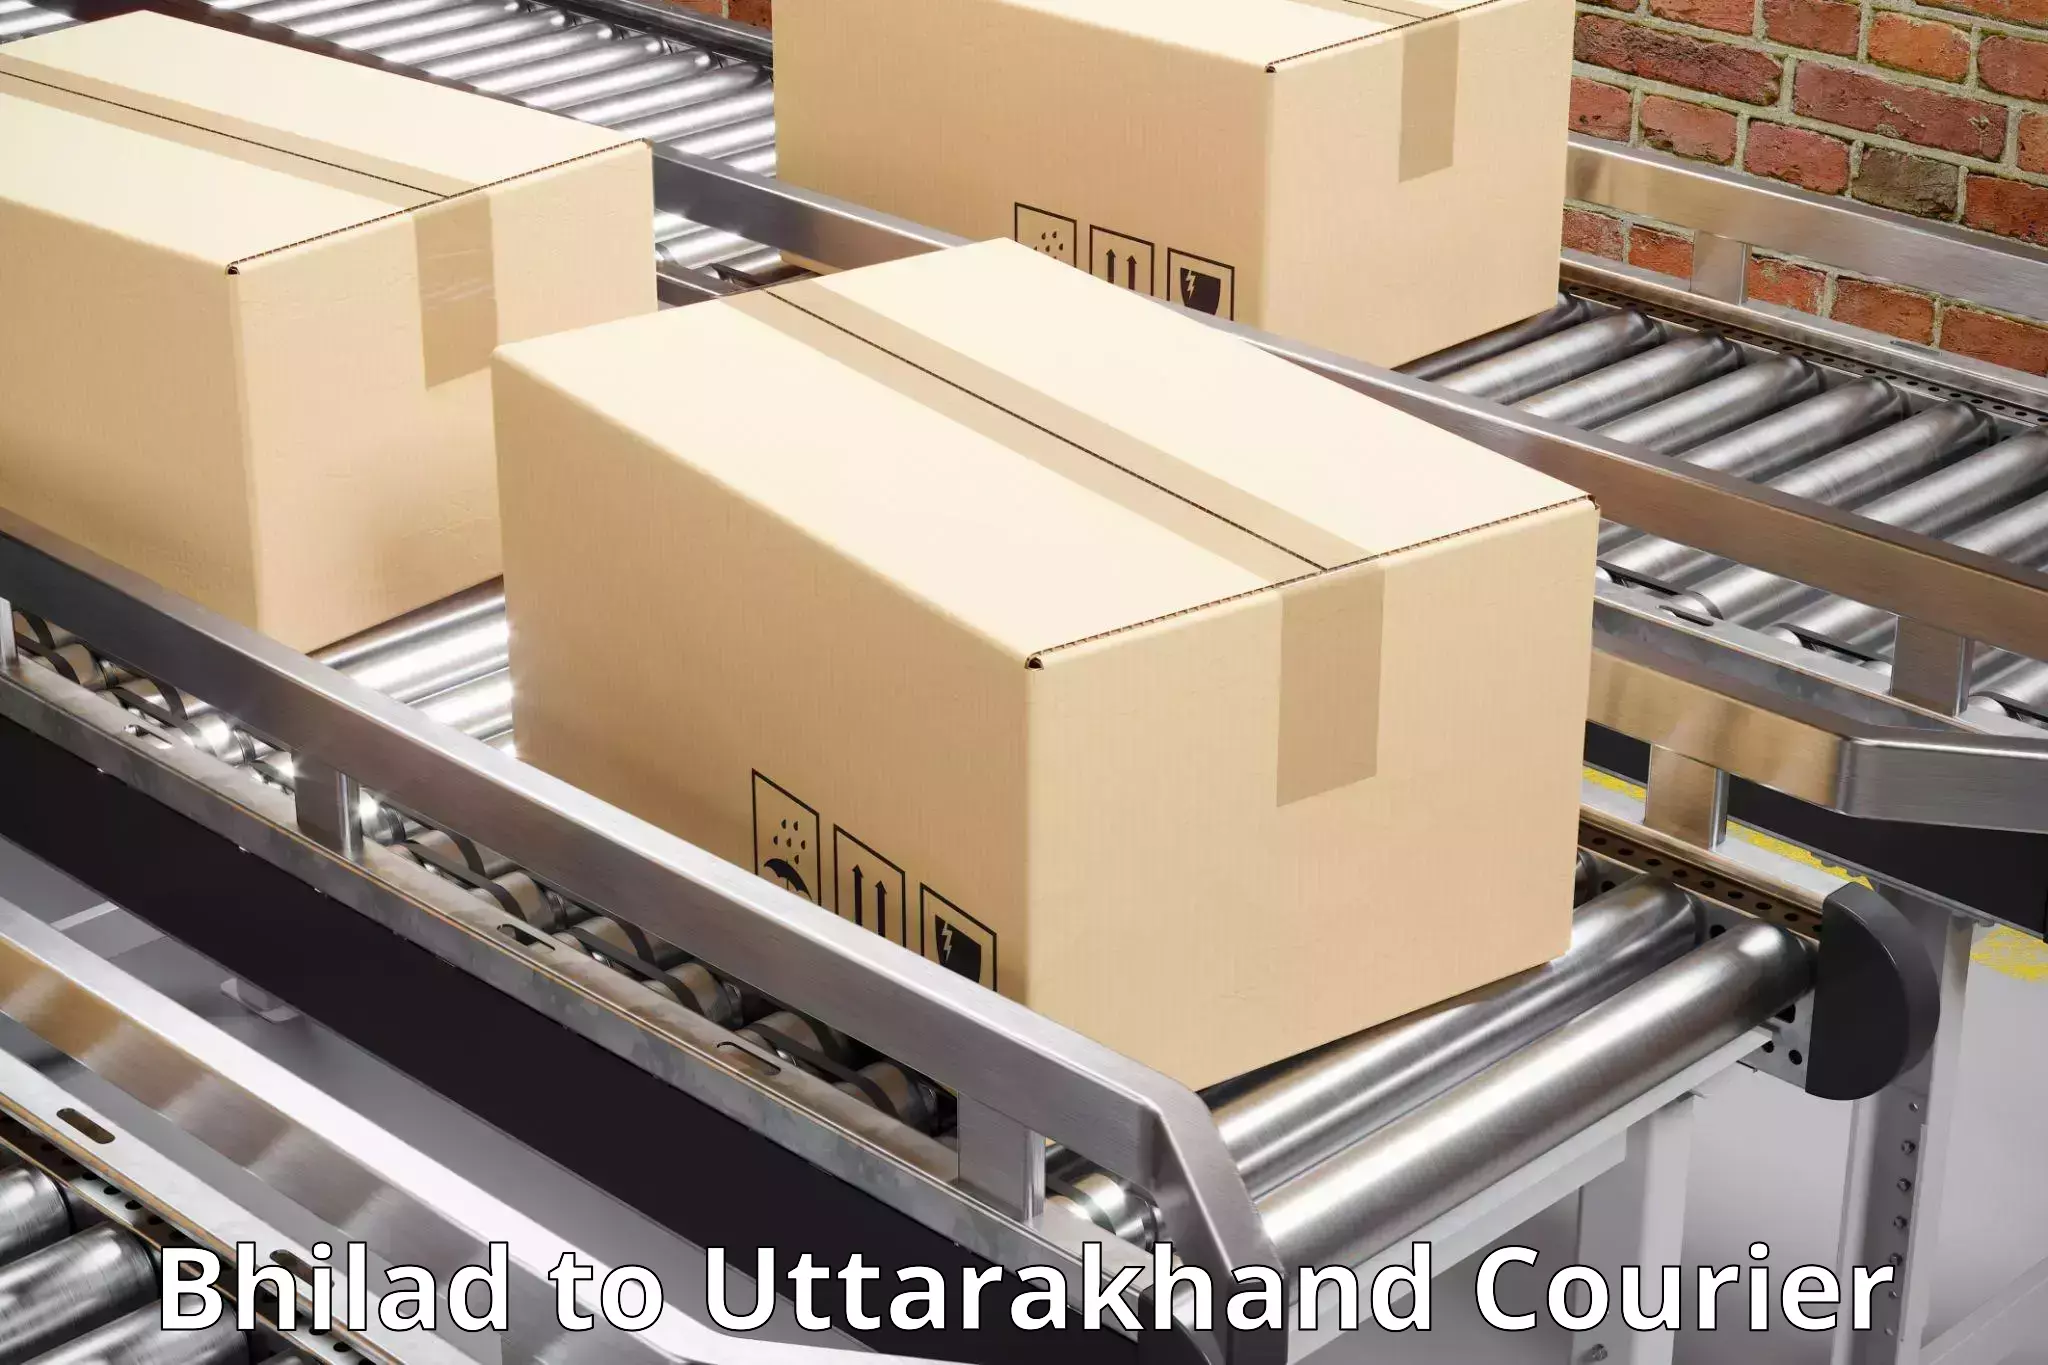 Package delivery network Bhilad to Udham Singh Nagar